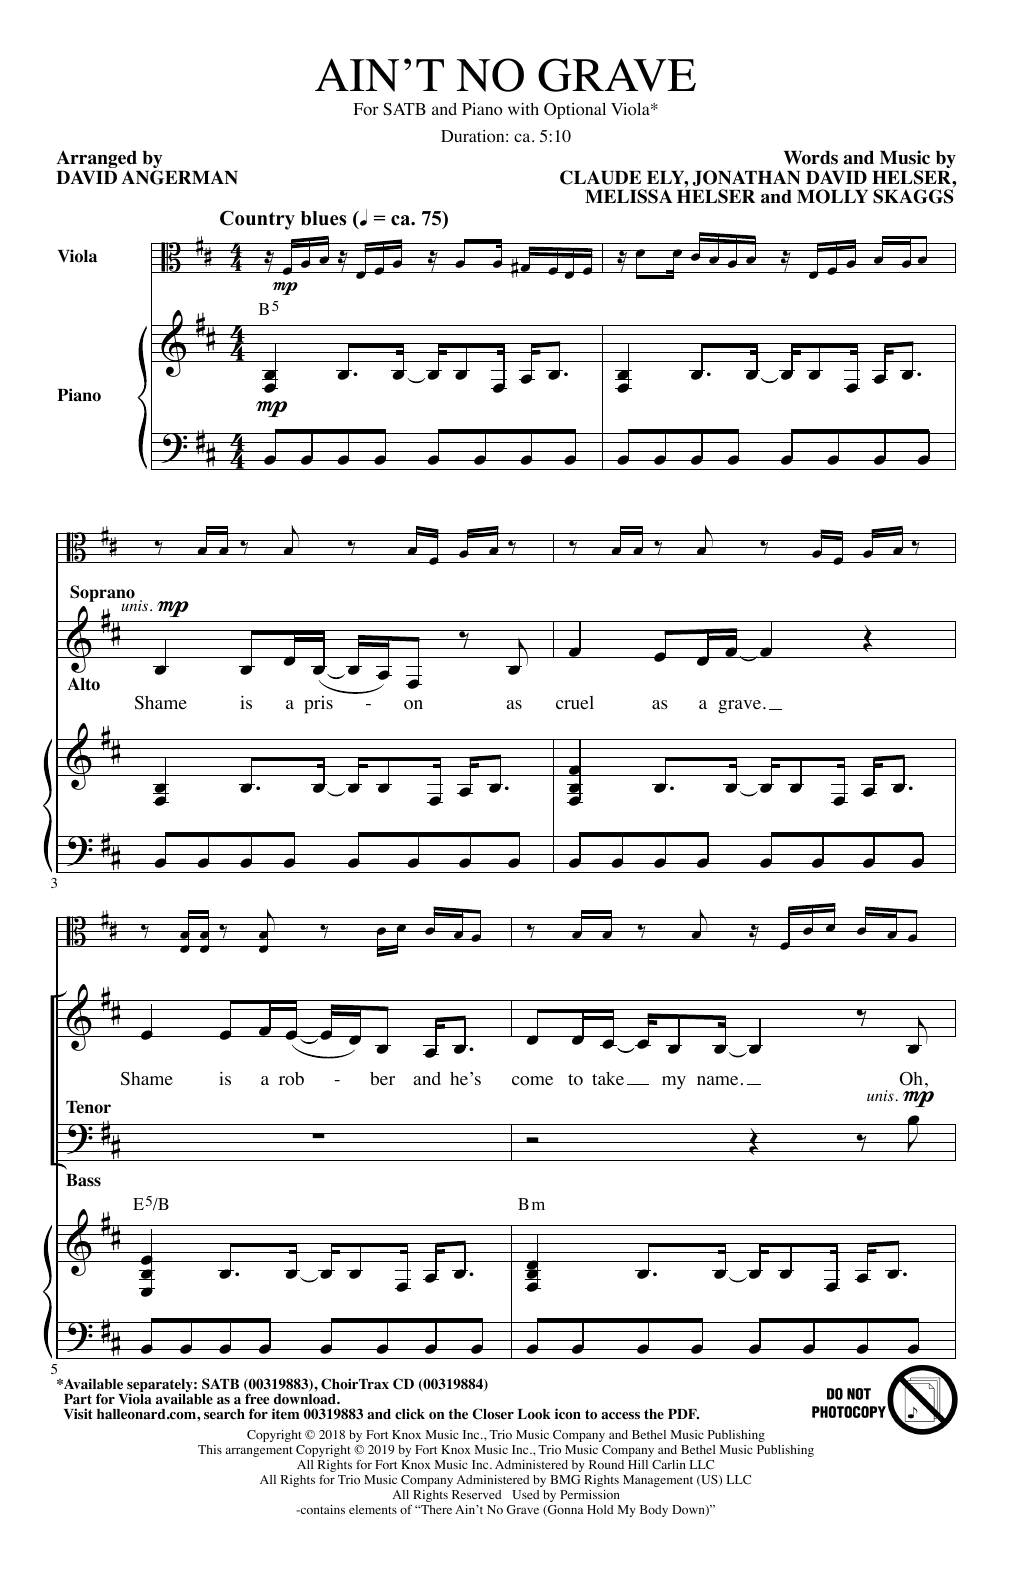 Bethel Worship Ain't No Grave (arr. David Angerman) Sheet Music Notes & Chords for SAB Choir - Download or Print PDF